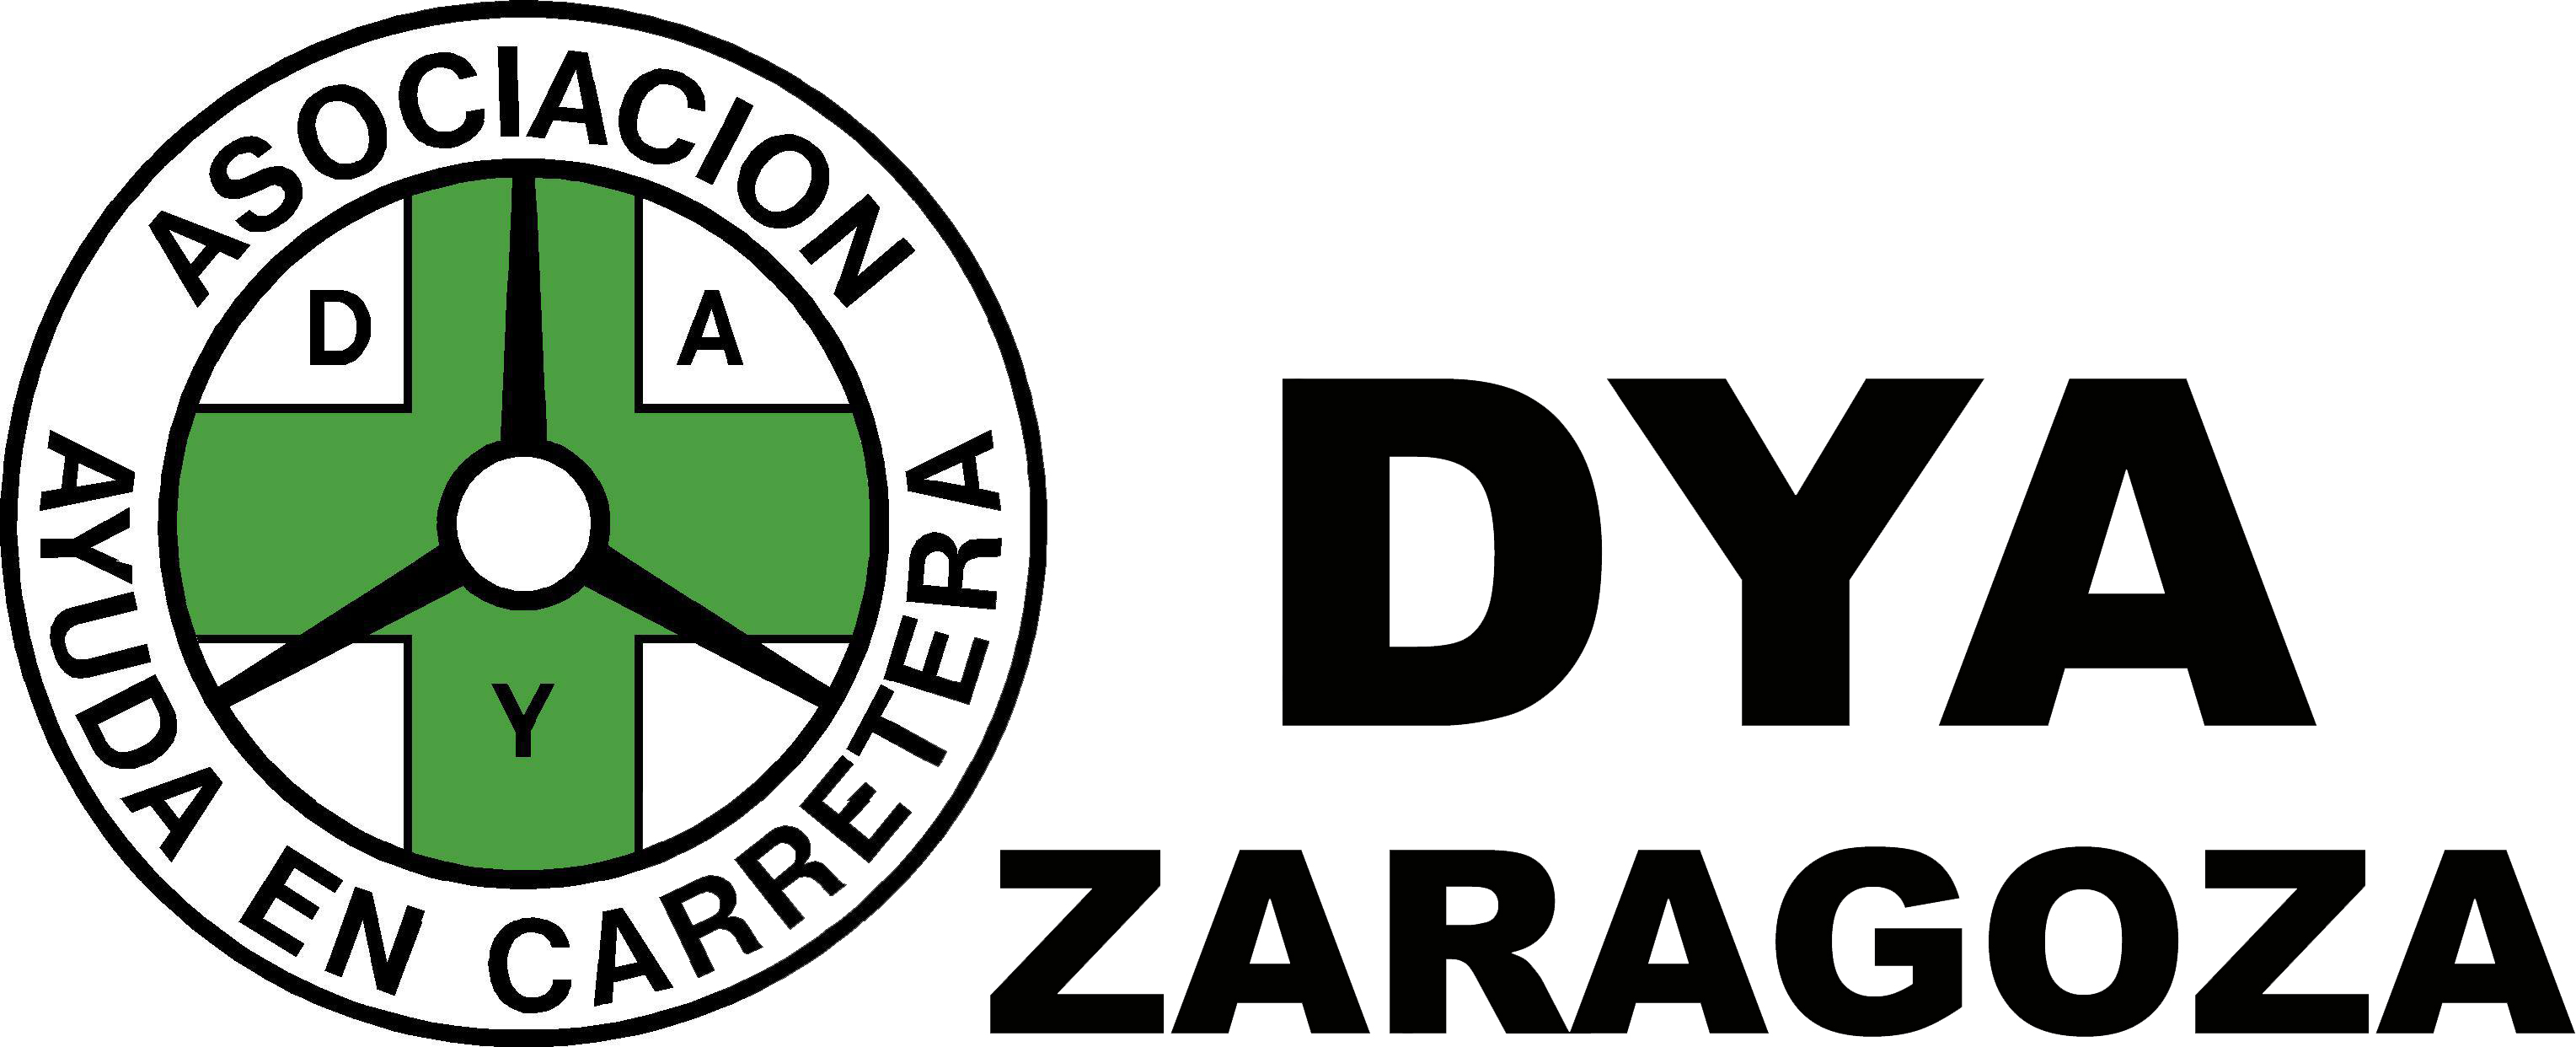 DYA Zaragoza